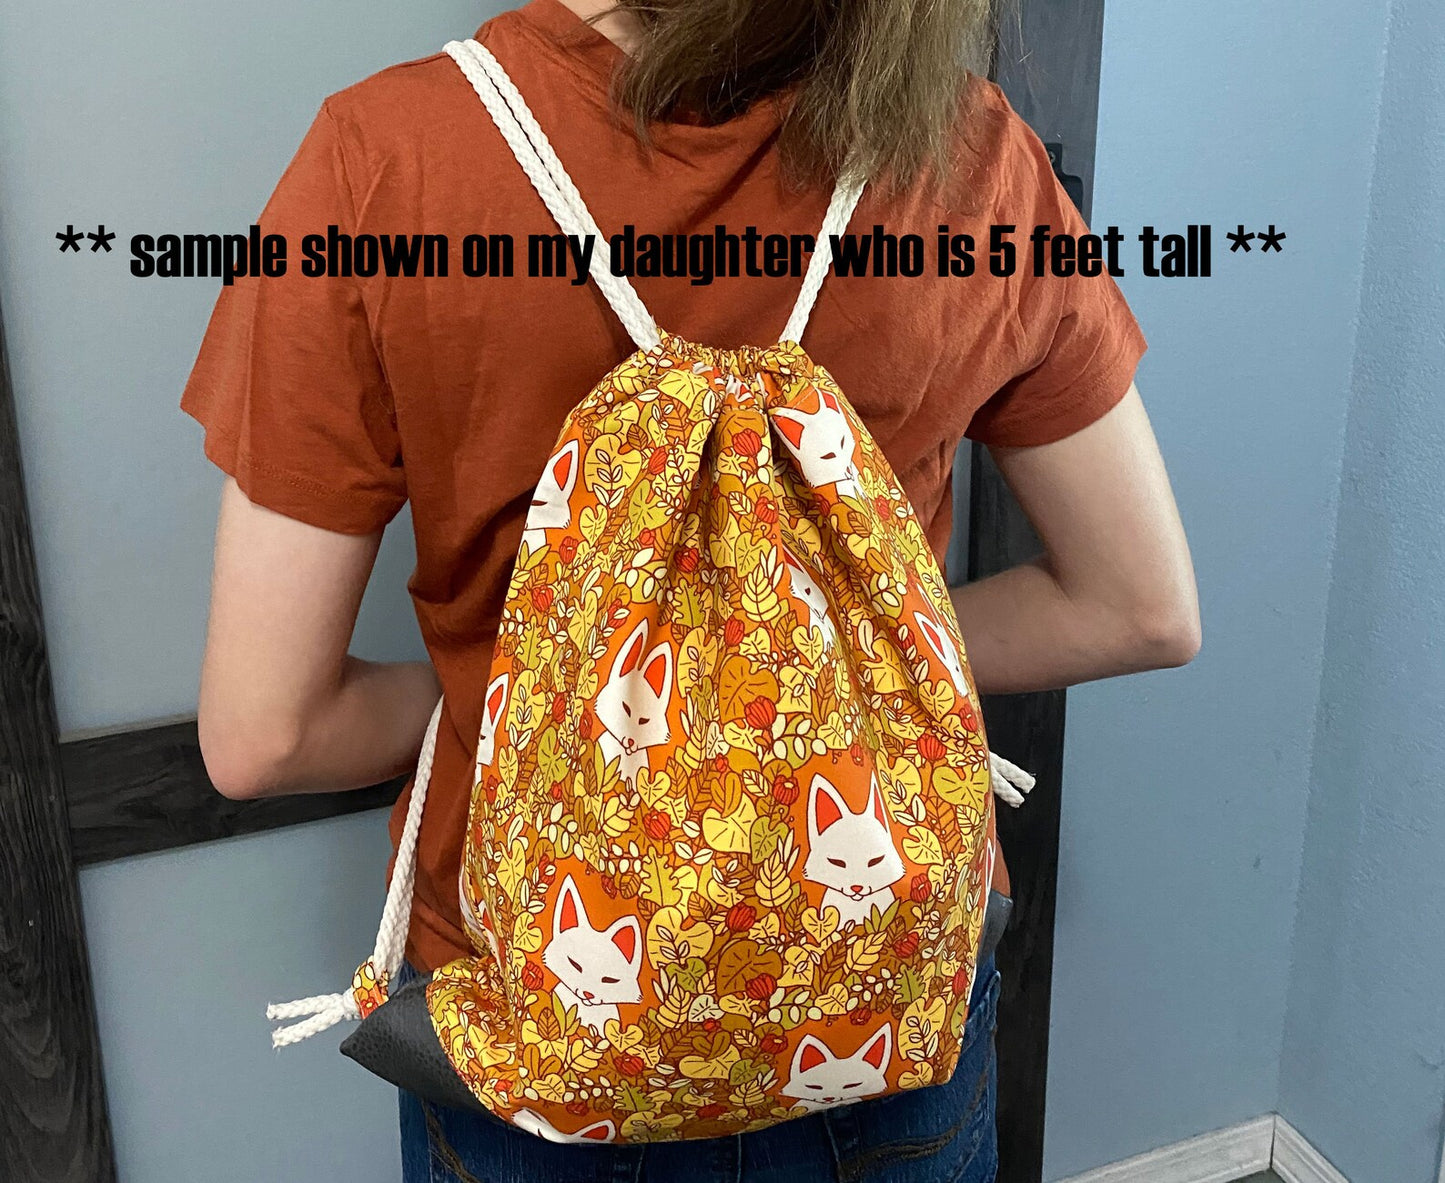 Cat Drawstring Bag - Handmade Drawstring Bag – Drawstring Backpack - On the Go Bag - Overnight Bag